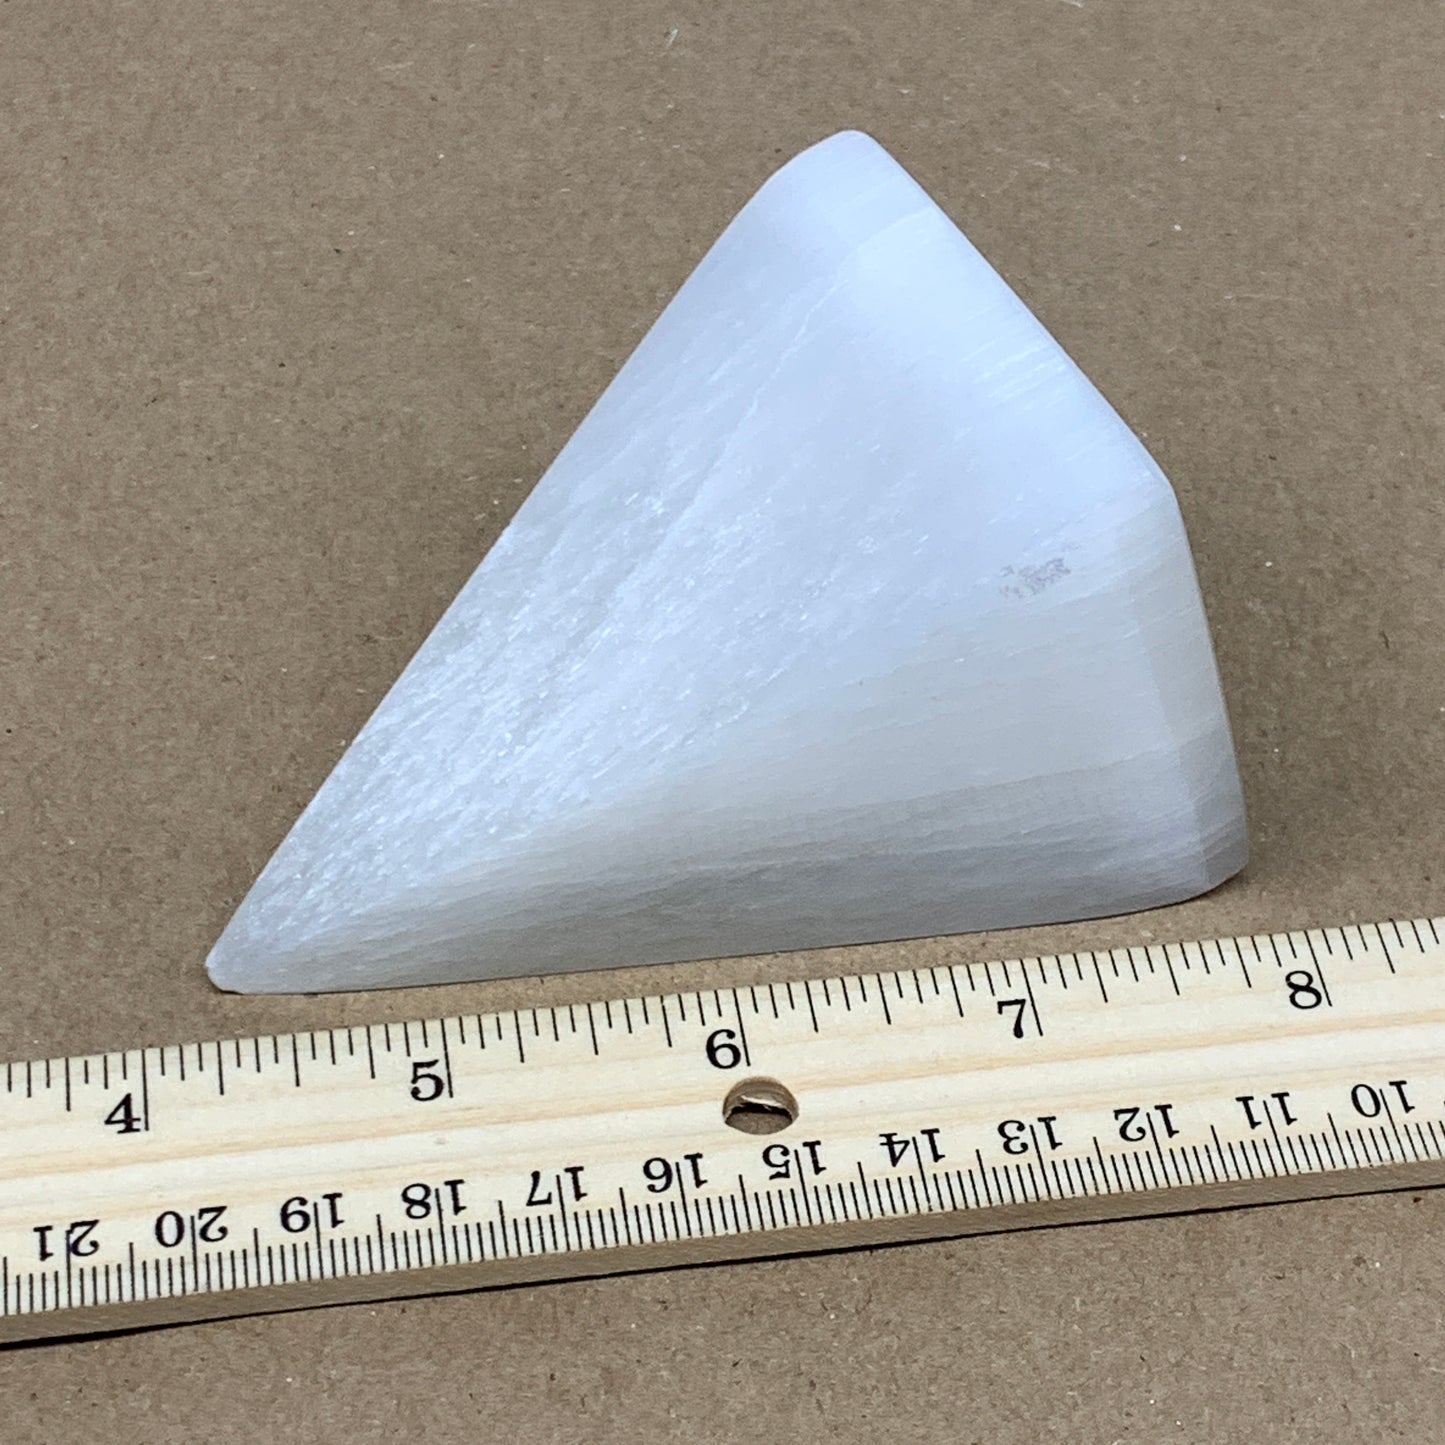 246g, 3.5"x2.1" White Selenite/Satin Spar Pyramid Crystal @Morocco, B24152